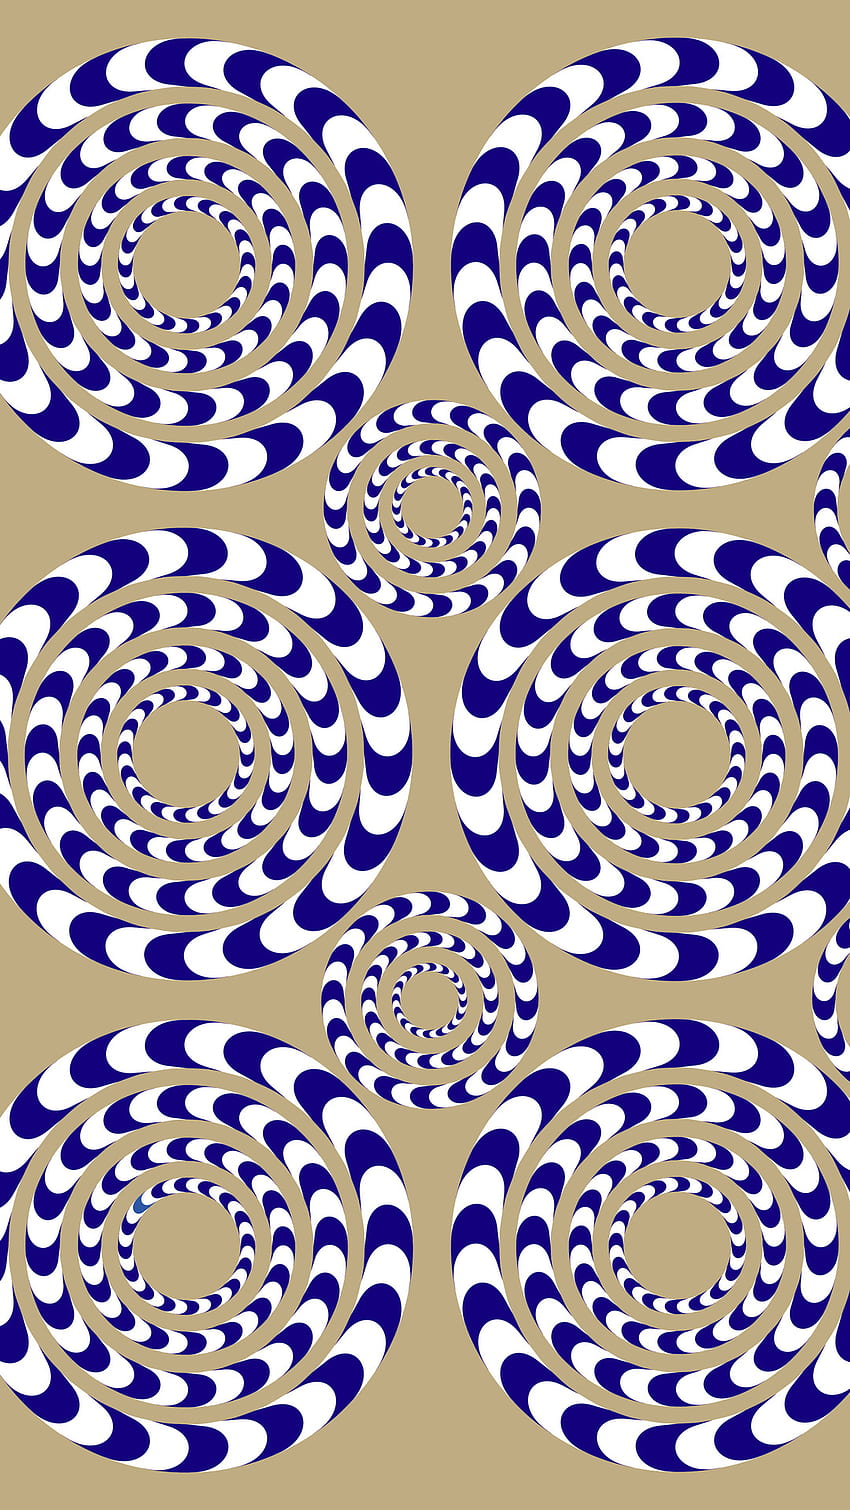 Classic Optical Illusions That Stump Everyone